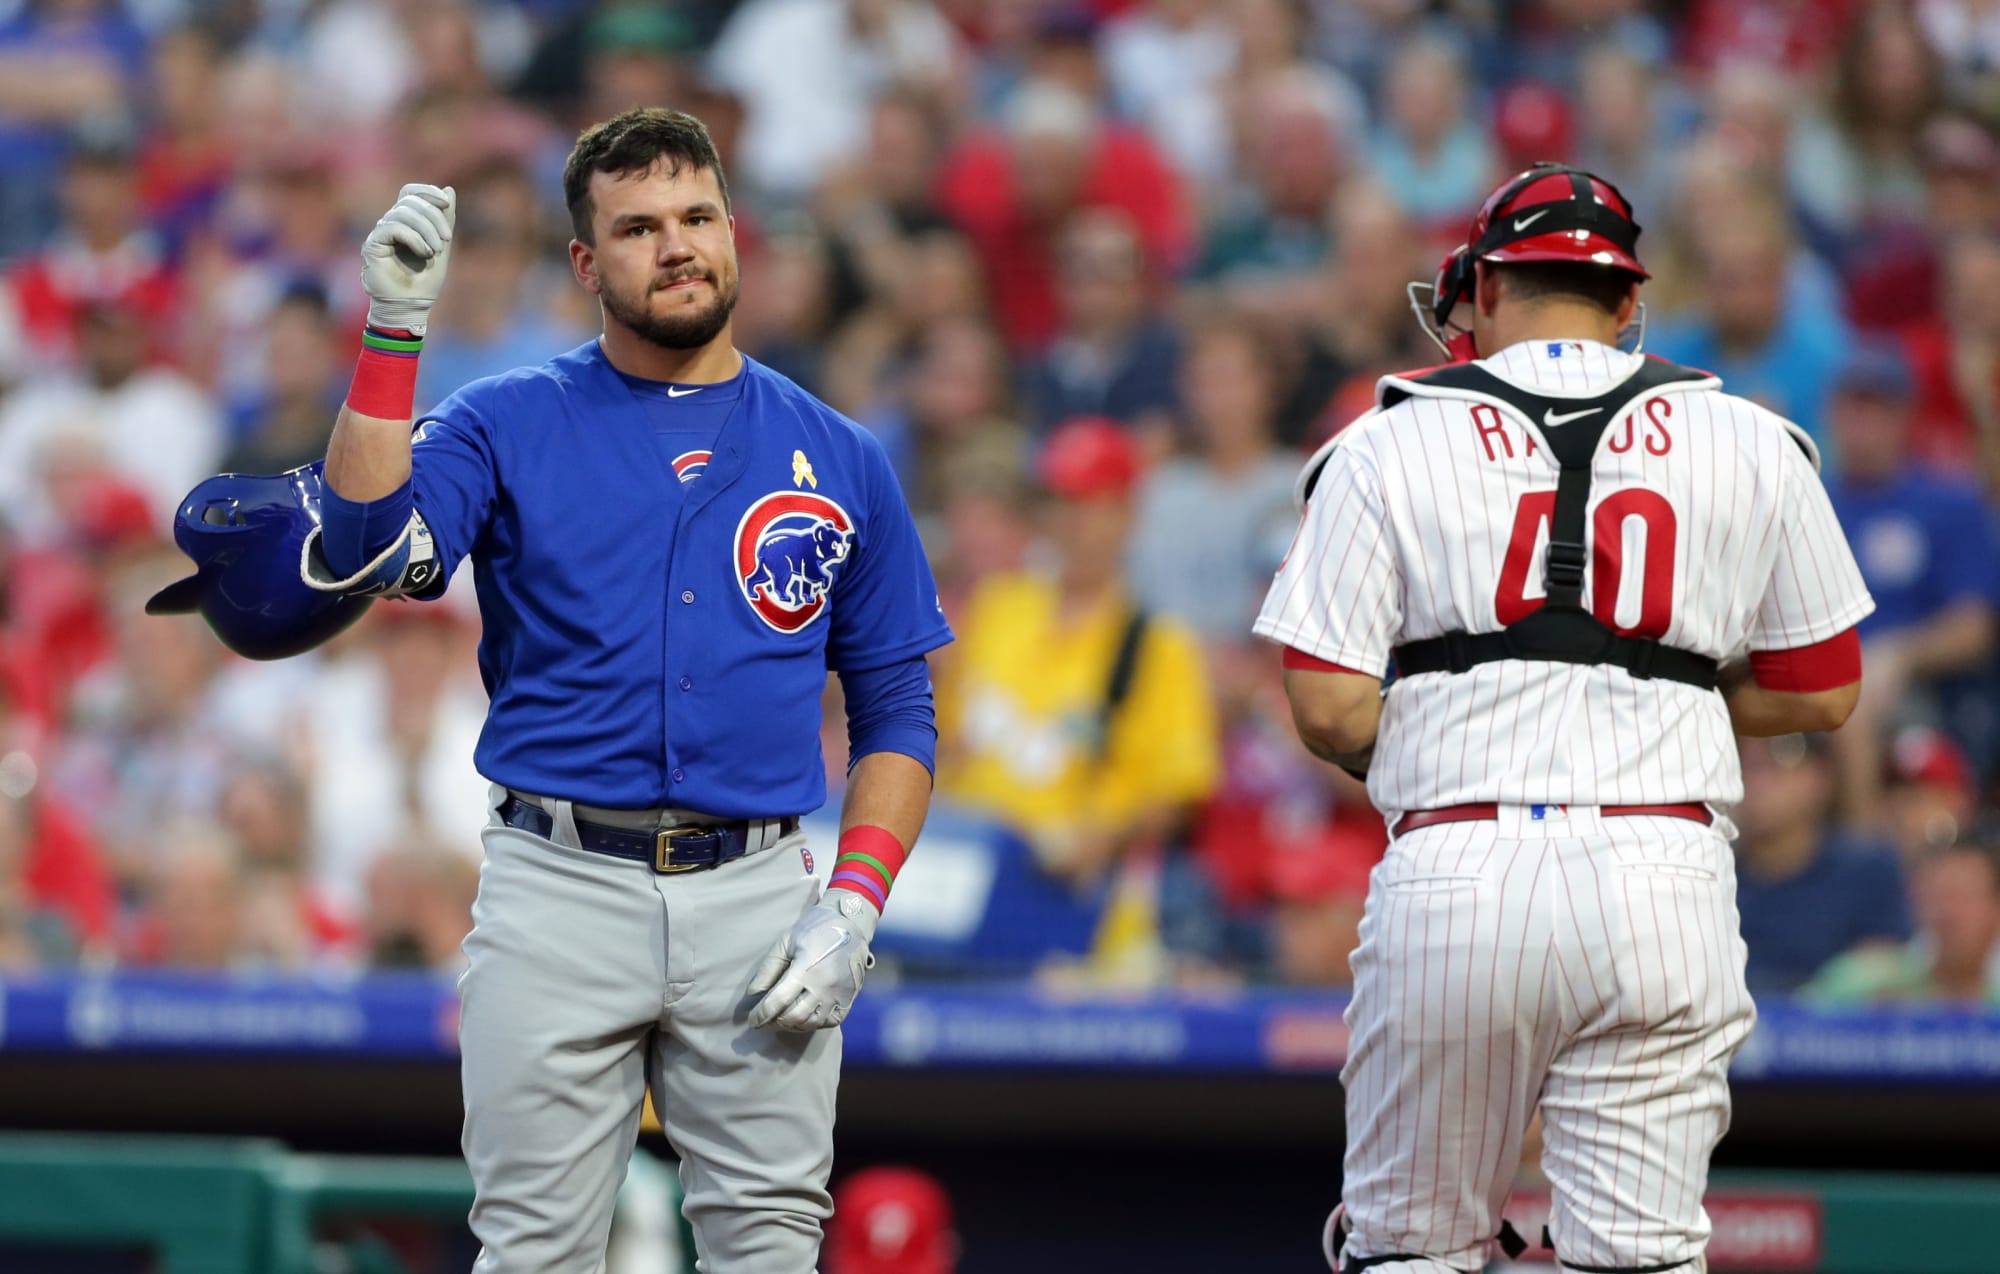 Chicago Cubs: Kyle Schwarber's exit should signal change in direction